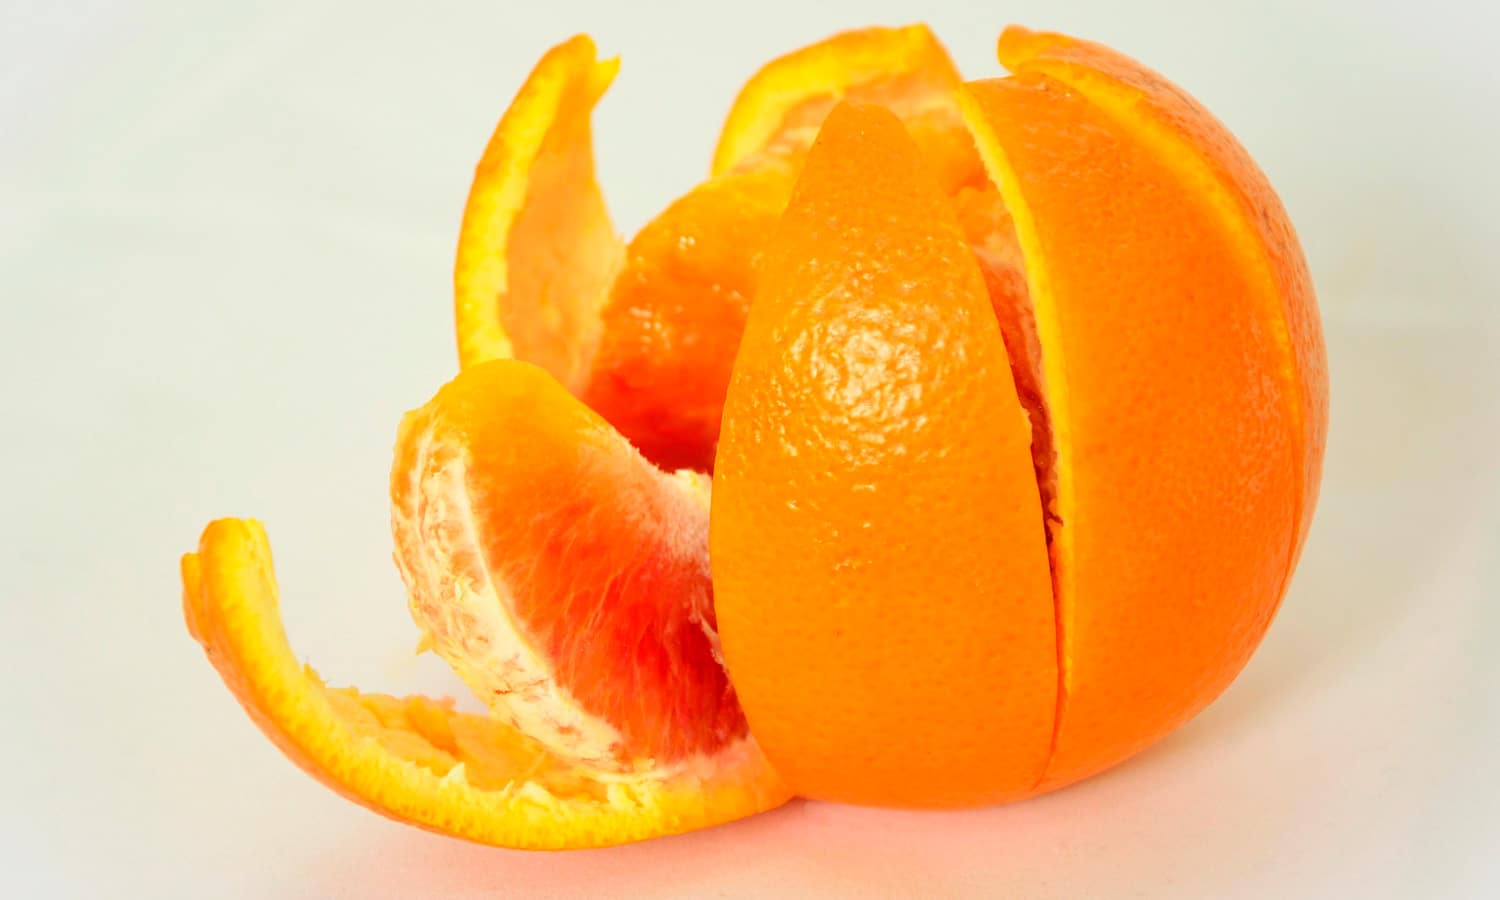 Japanese Company Makes CBD Out of Orange Peel, It Claims